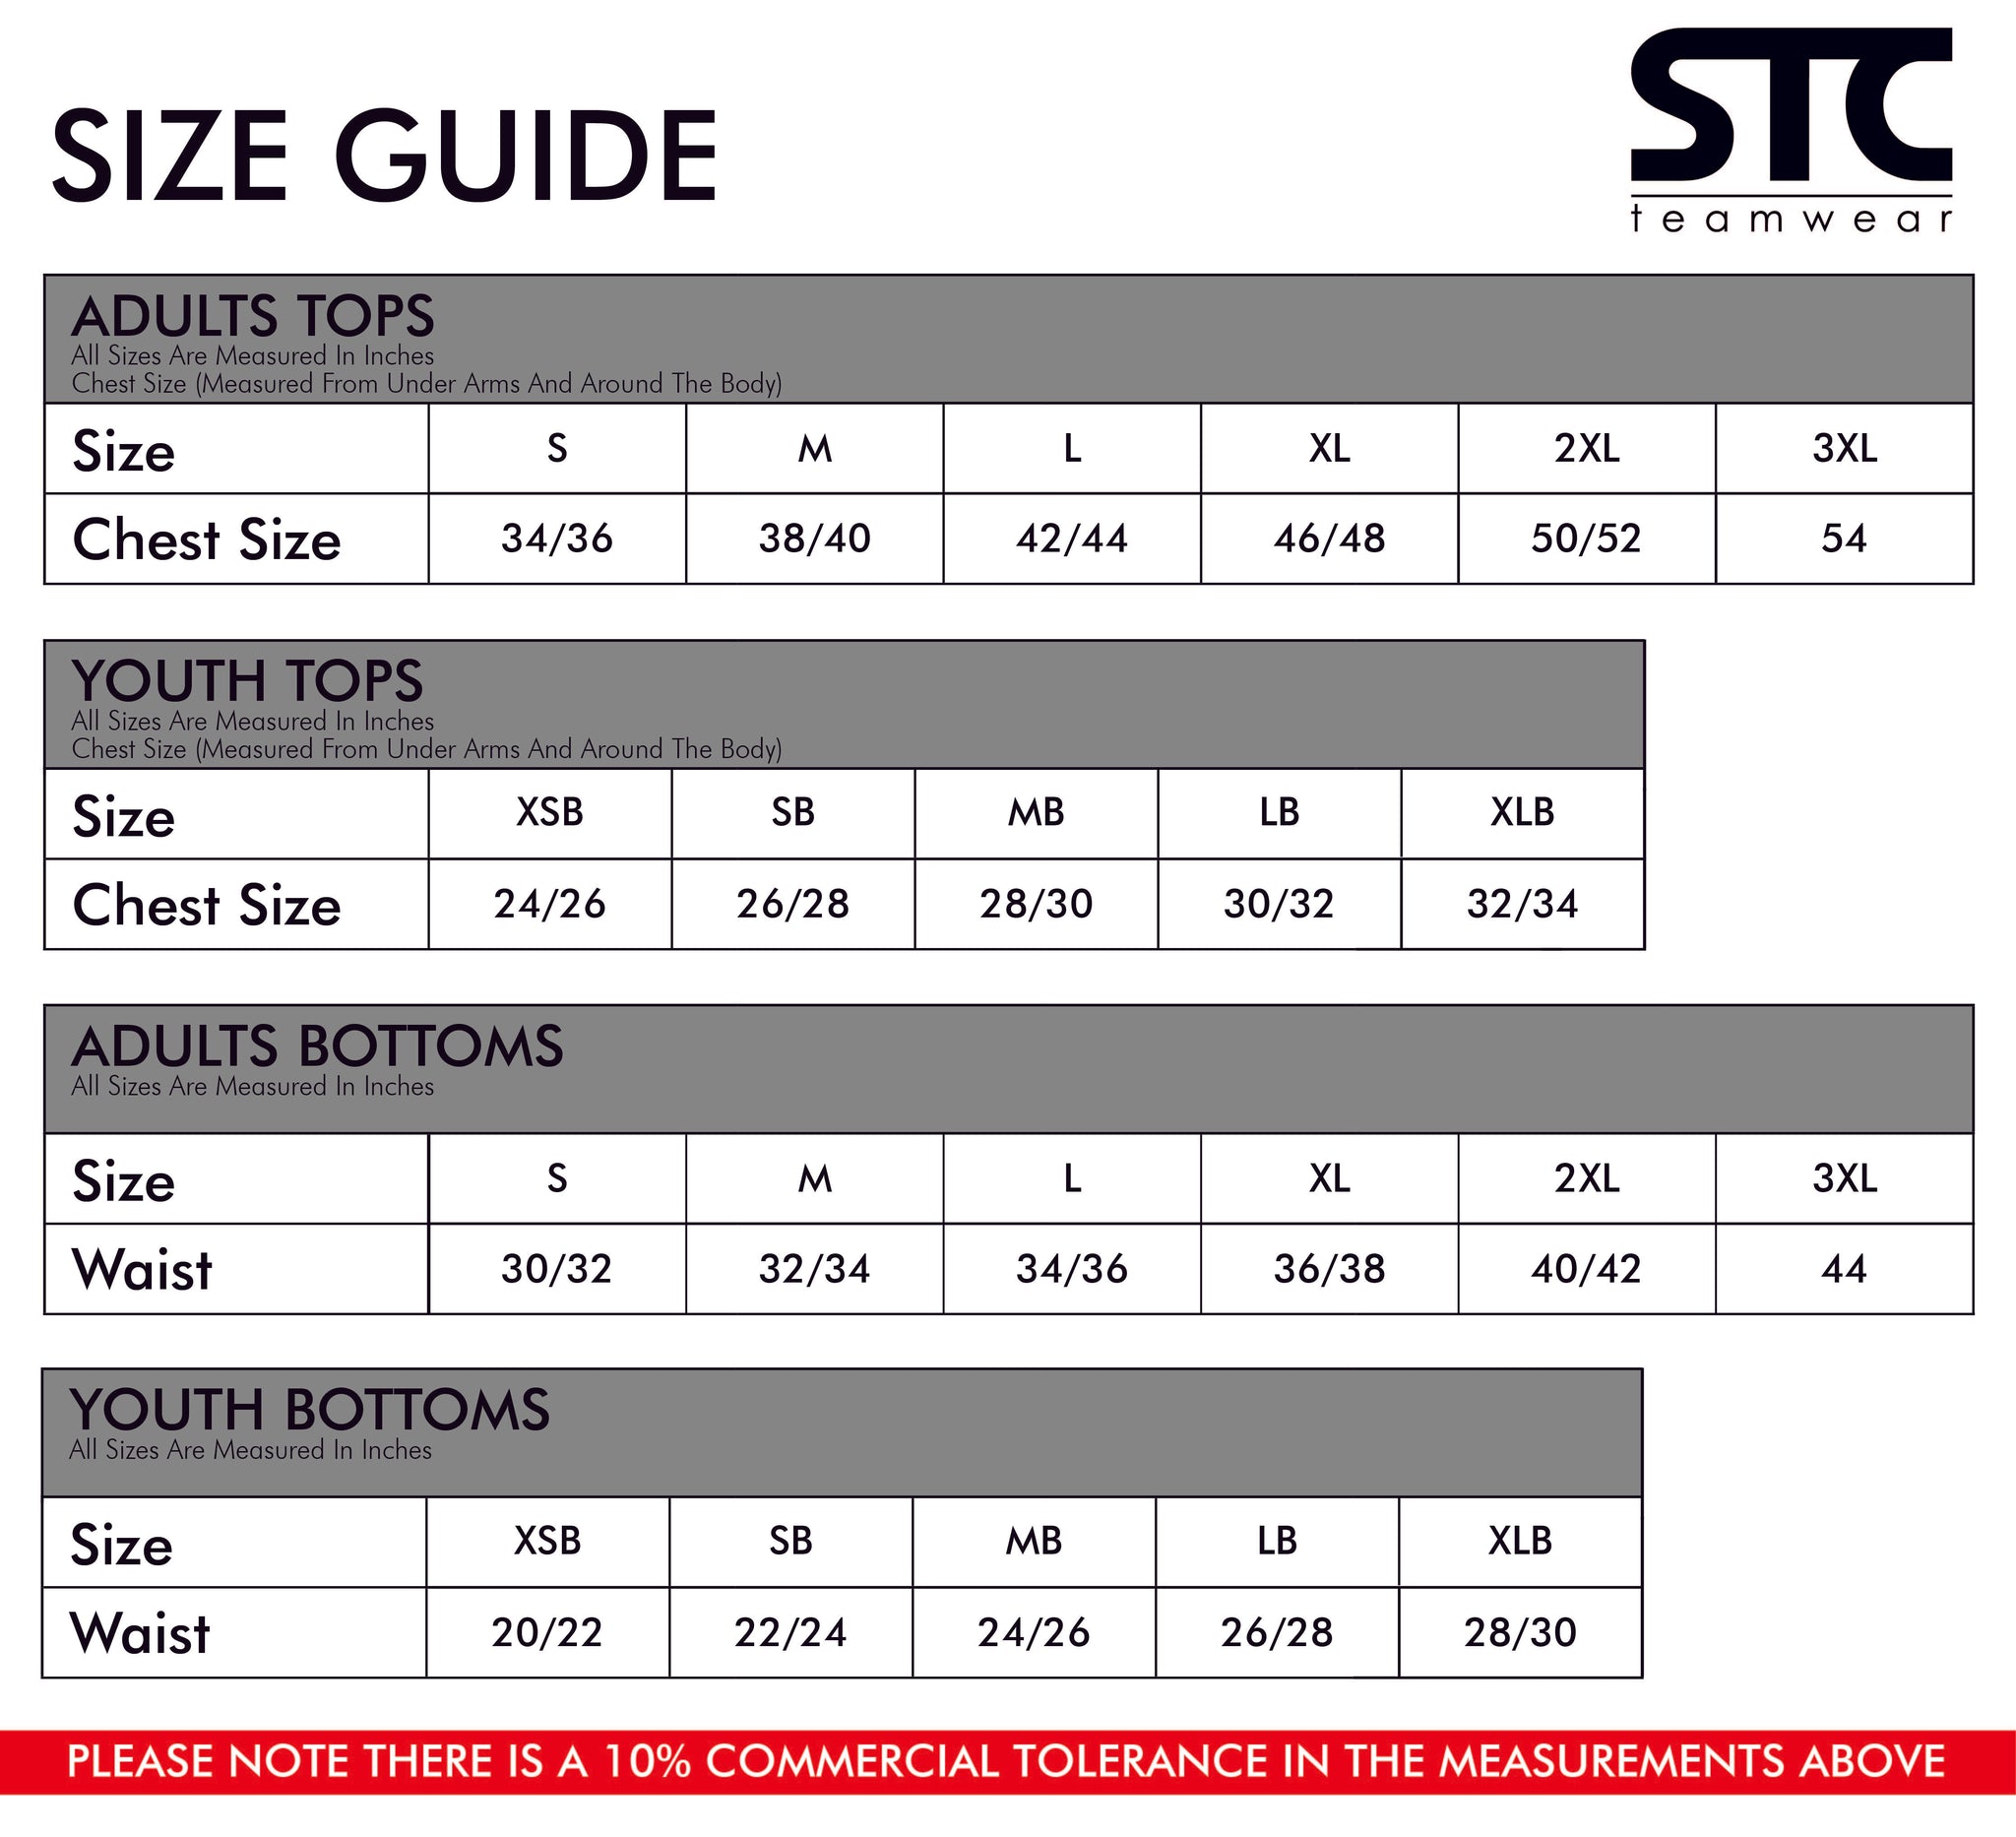 SIZE GUIDE - Behrens – STC Teamwear Stores